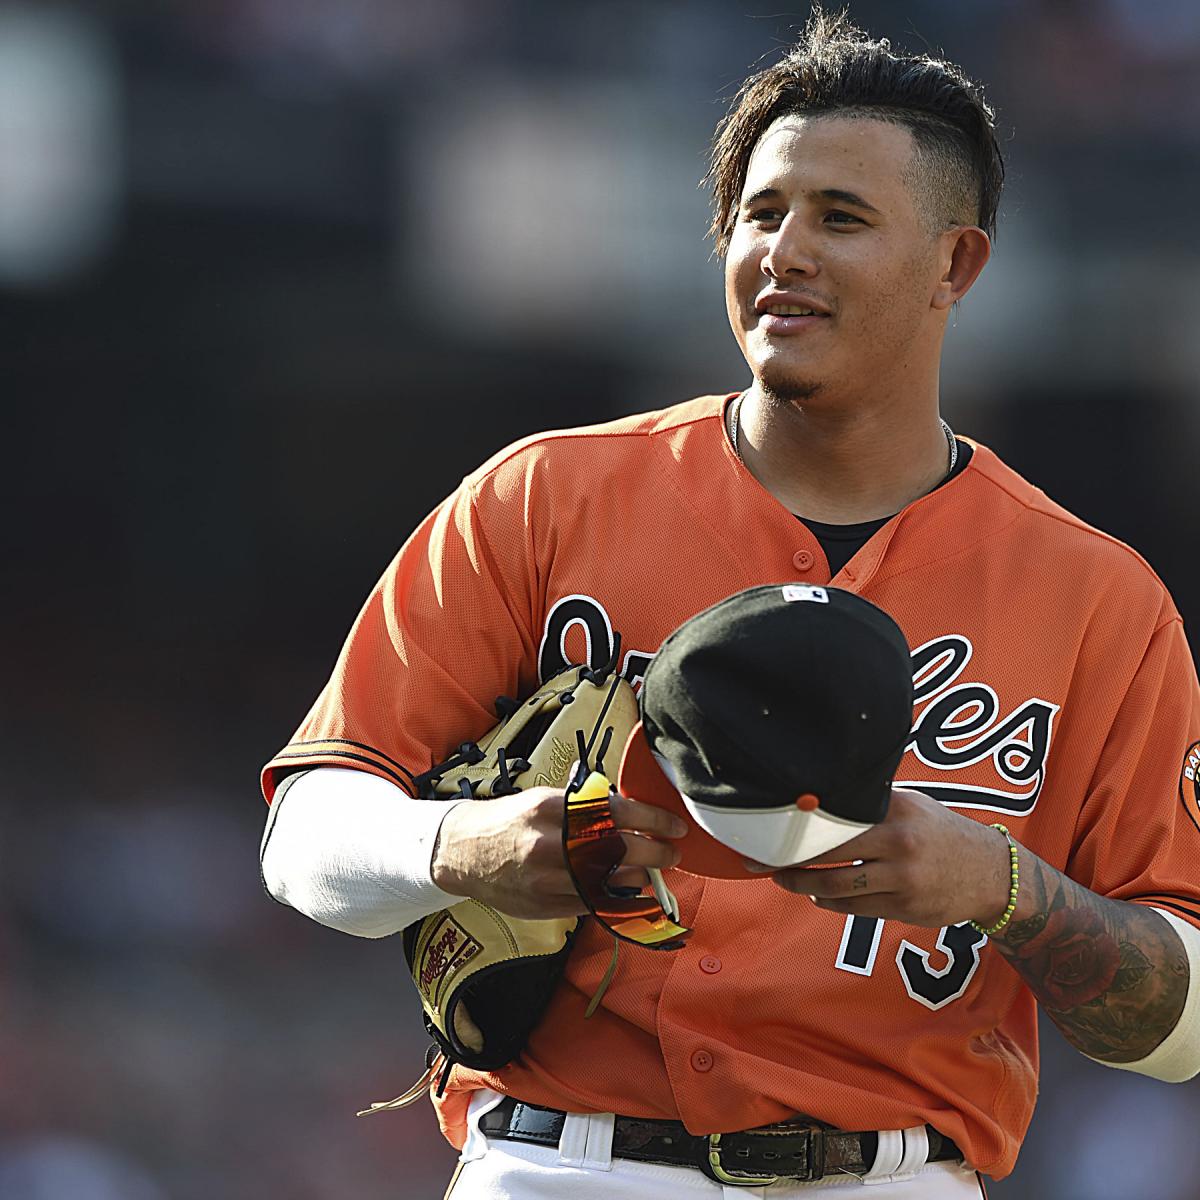 Baltimore Orioles: Reevaluating the Manny Machado trade